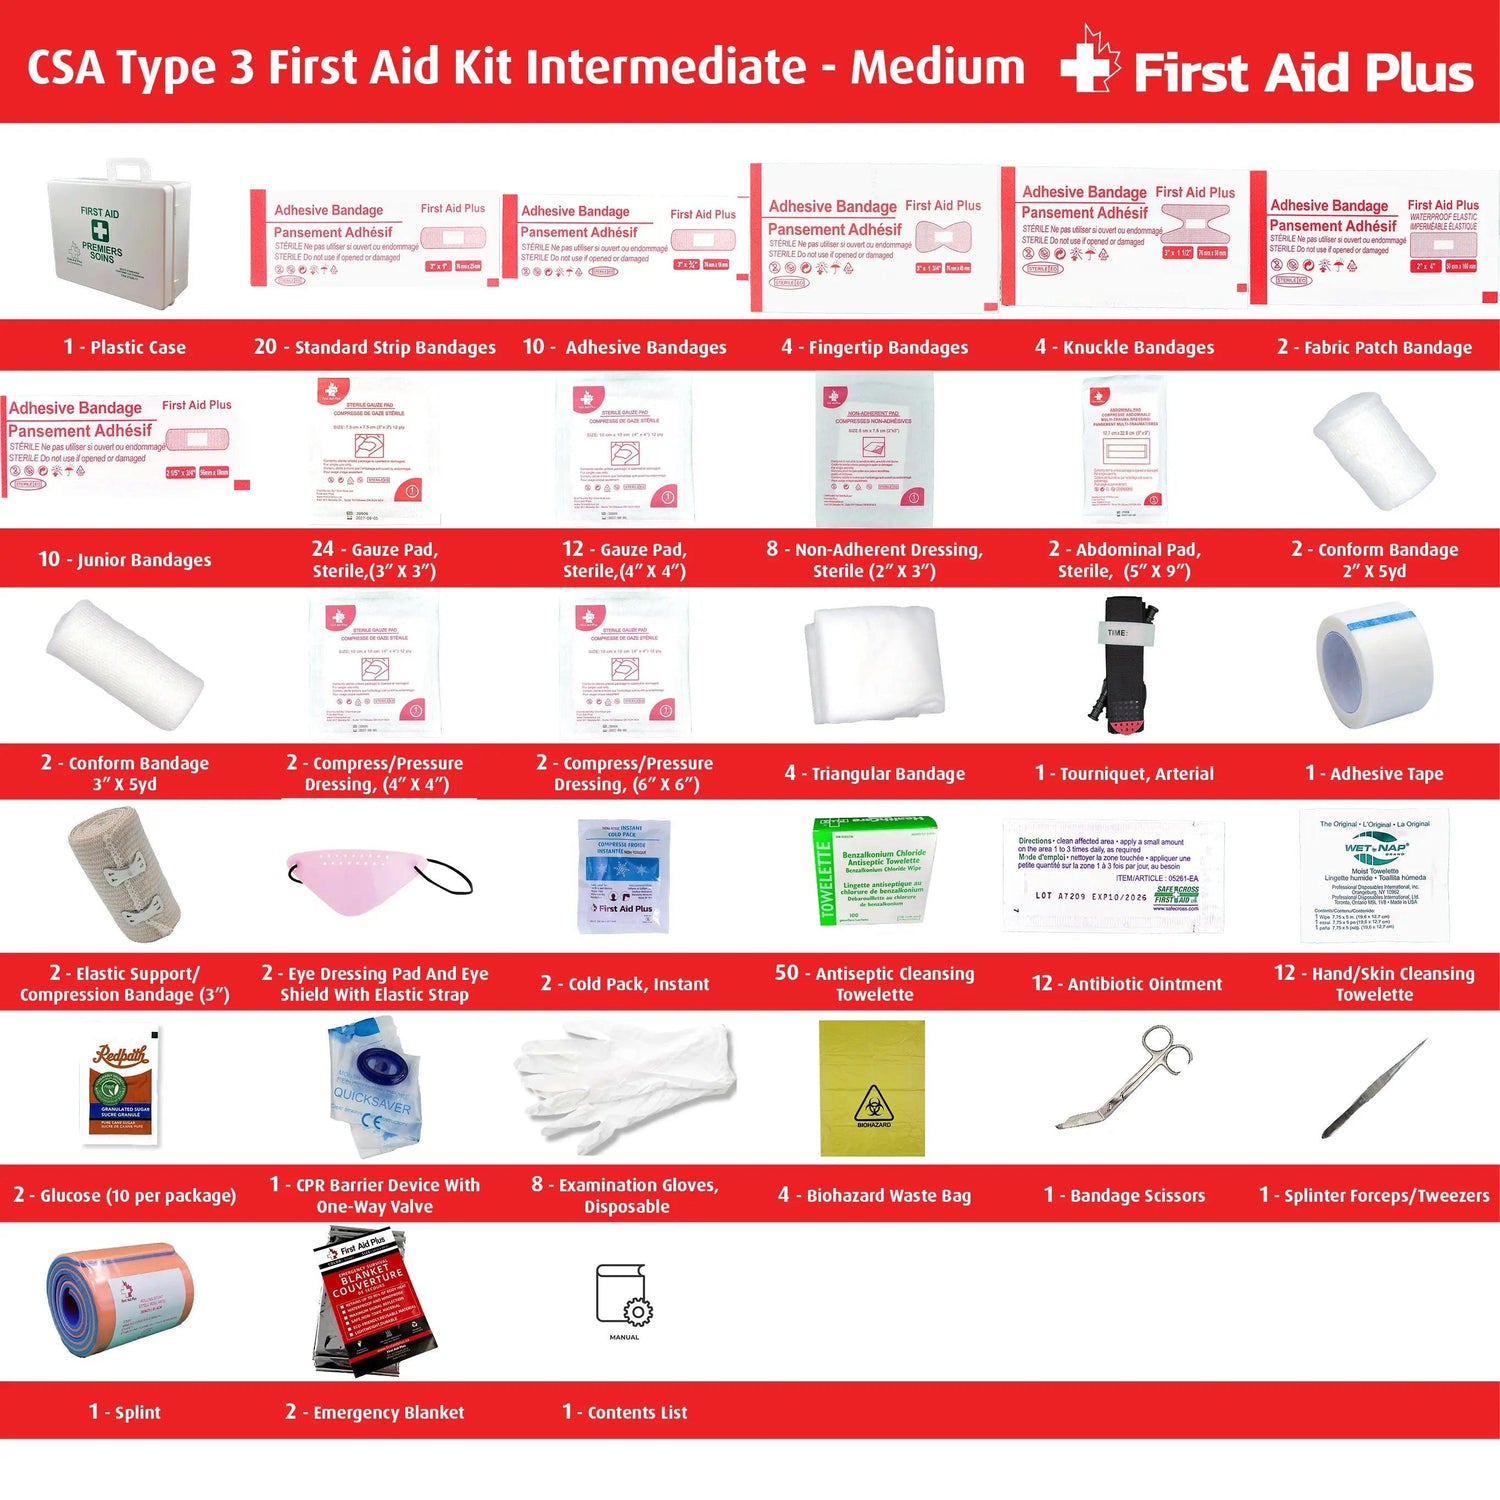 CSA Type 3 Intermediate First Aid Kit - Medium (26-50 Workers) First Aid Plus